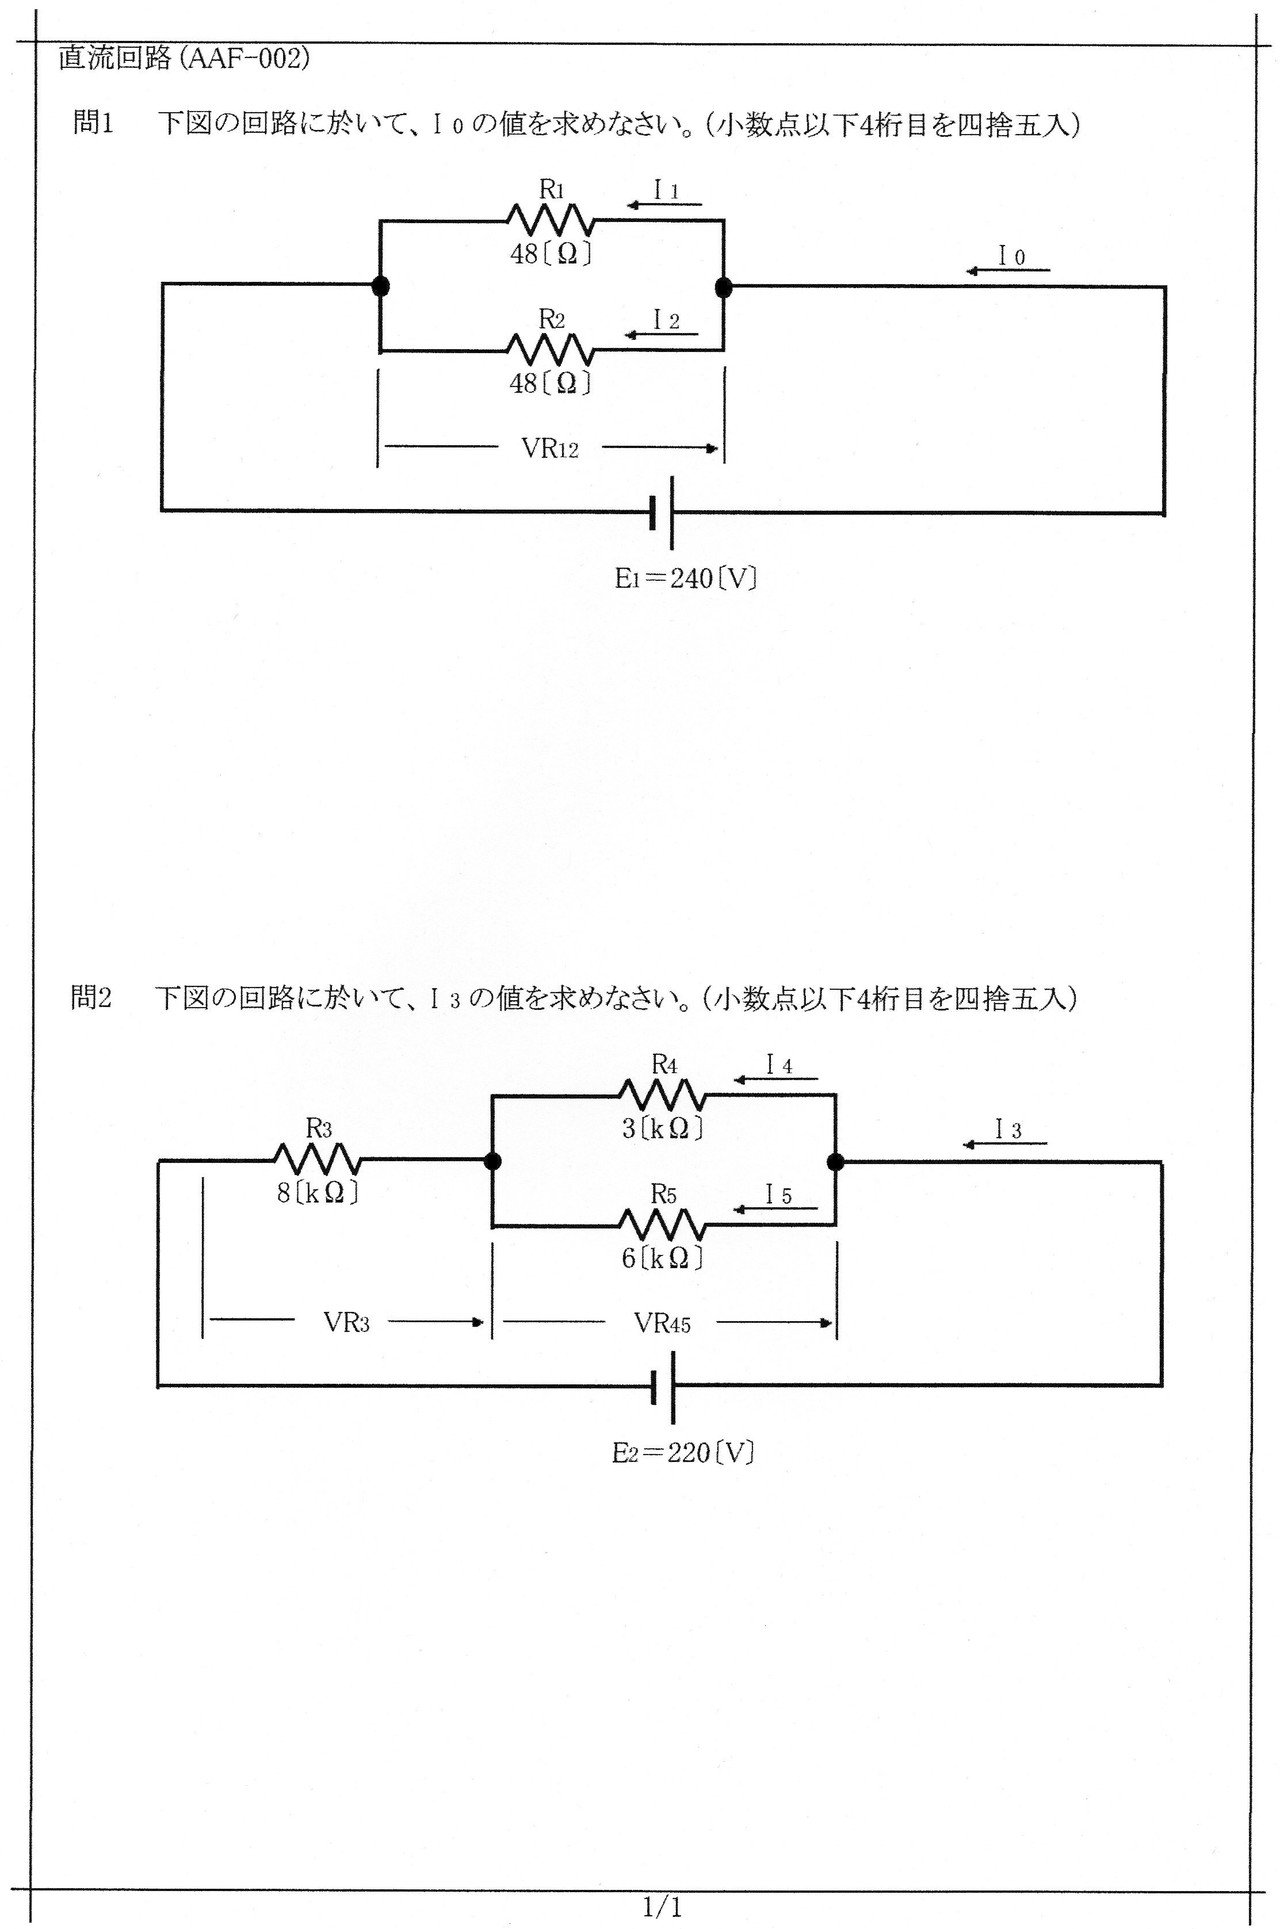 f 002 オームの法則 直流回路 抵抗回路 電流の計算 抵抗の計算 電圧の計算 並列回路 直列回路 に関する 問題と解答です f 002 電気の問題集研究所 Dmk Note